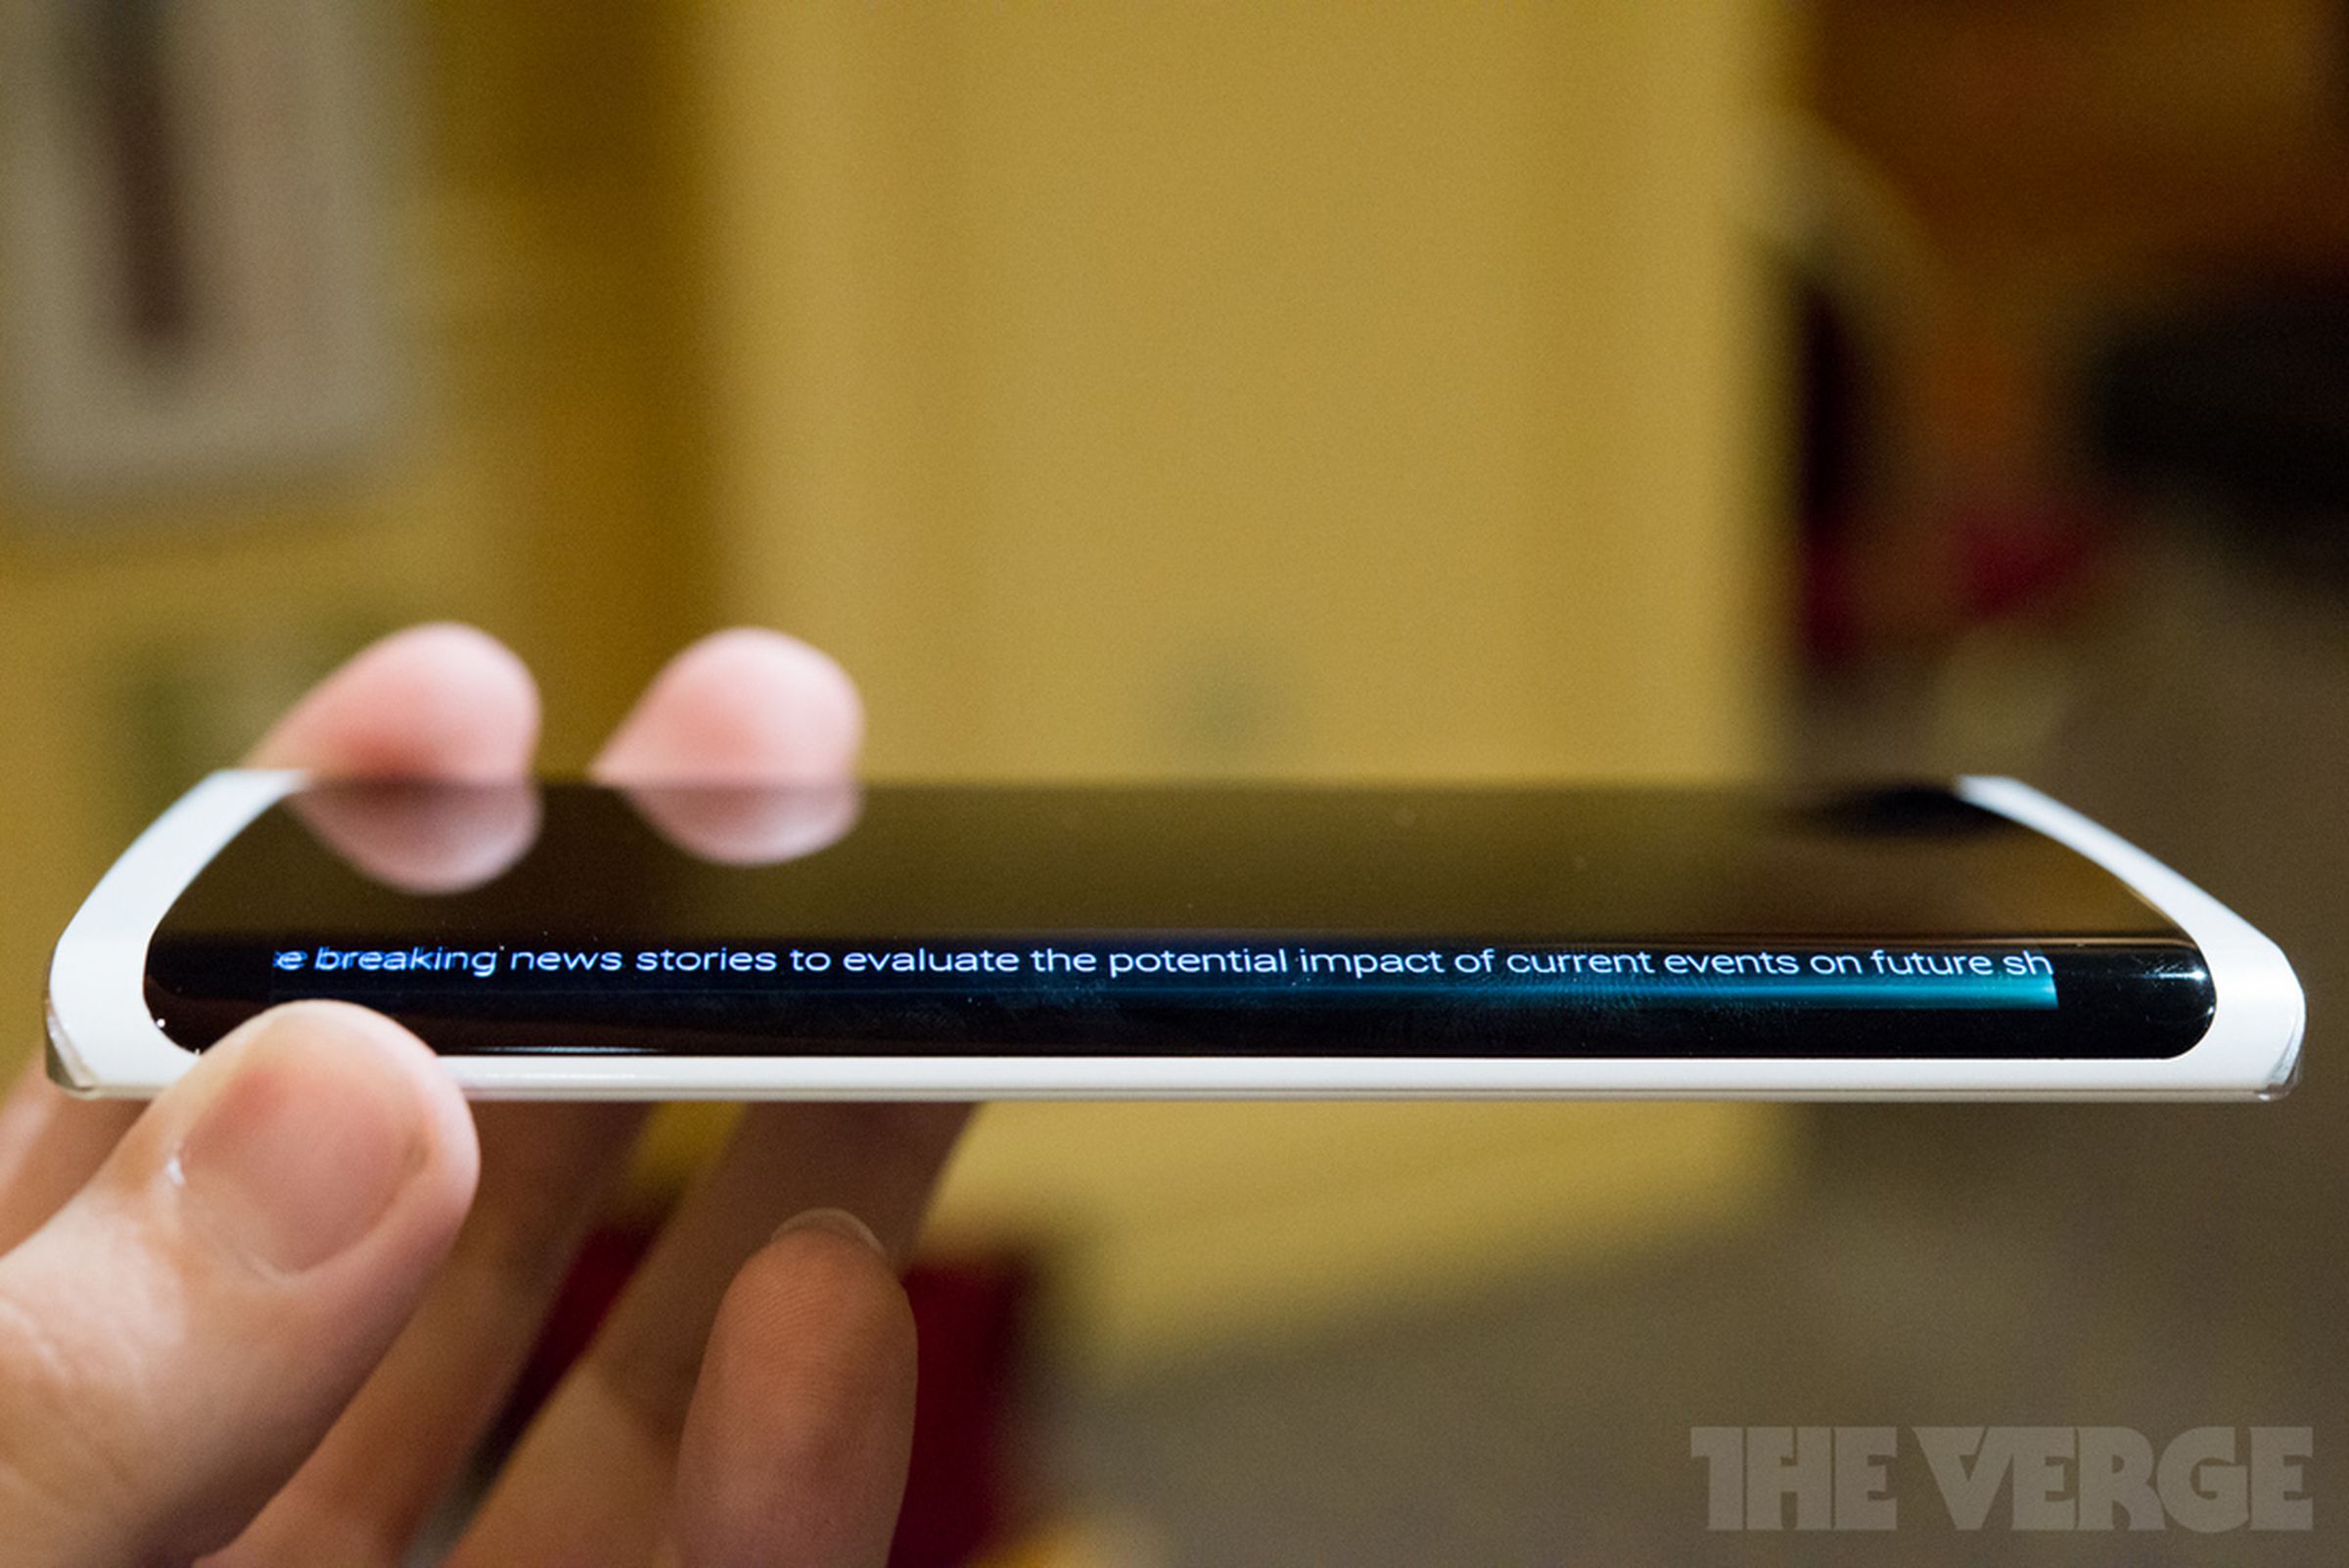 Samsung flexible OLED prototype phone